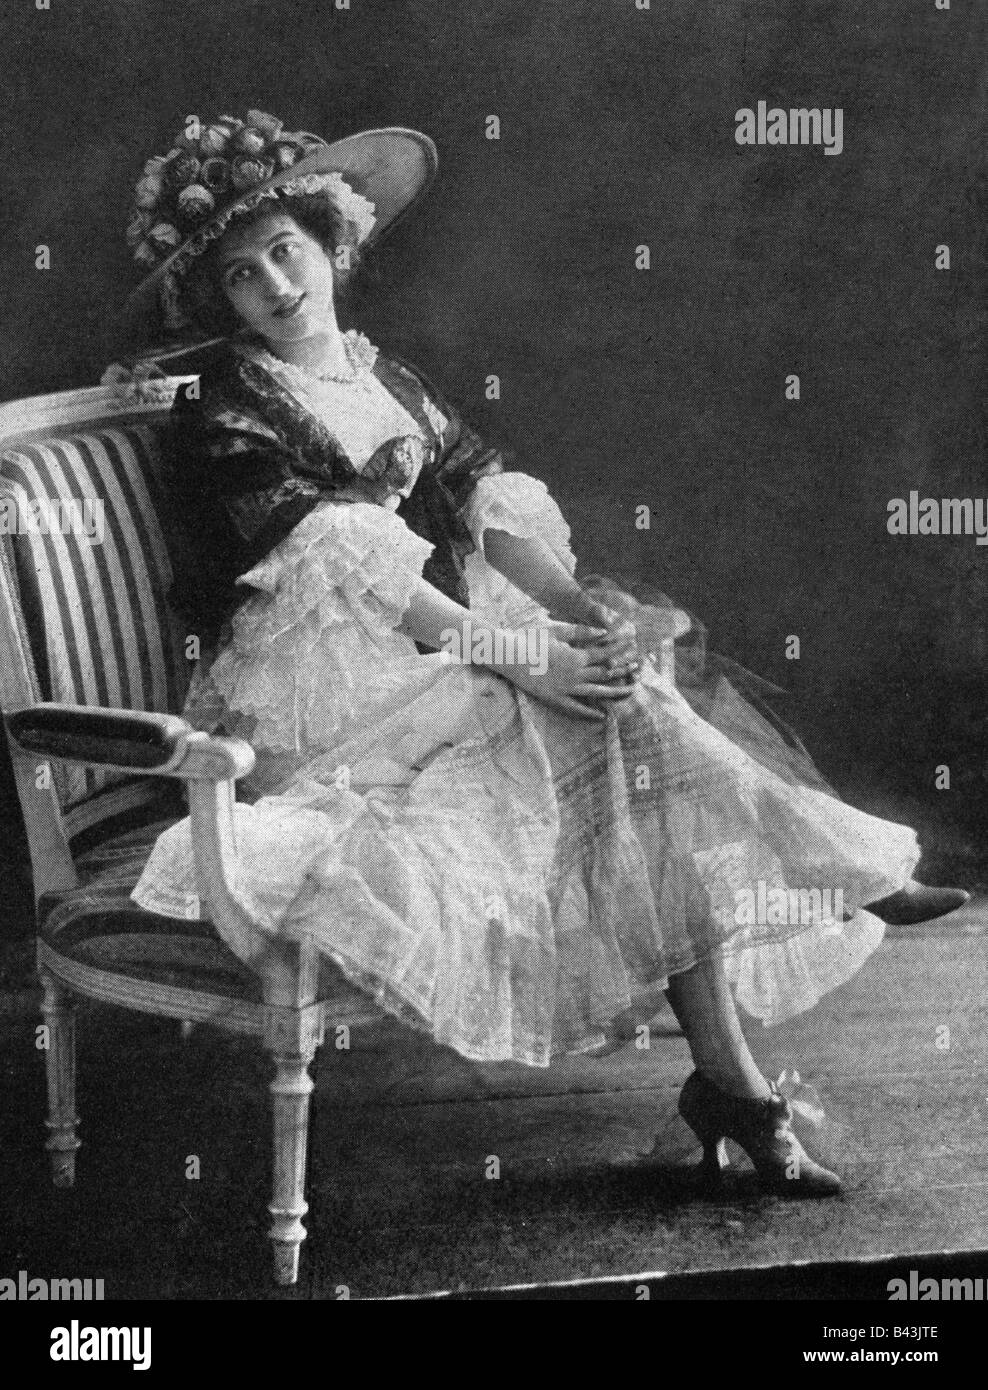 Deslys, Gaby, 4.11.1881 - 11.2.1920, French dancer, actress, as 'Commiere' at the Revue des Variete Ambassadeurs, Paris, circa 1910, photo by Reutlinger, half length, Stock Photo